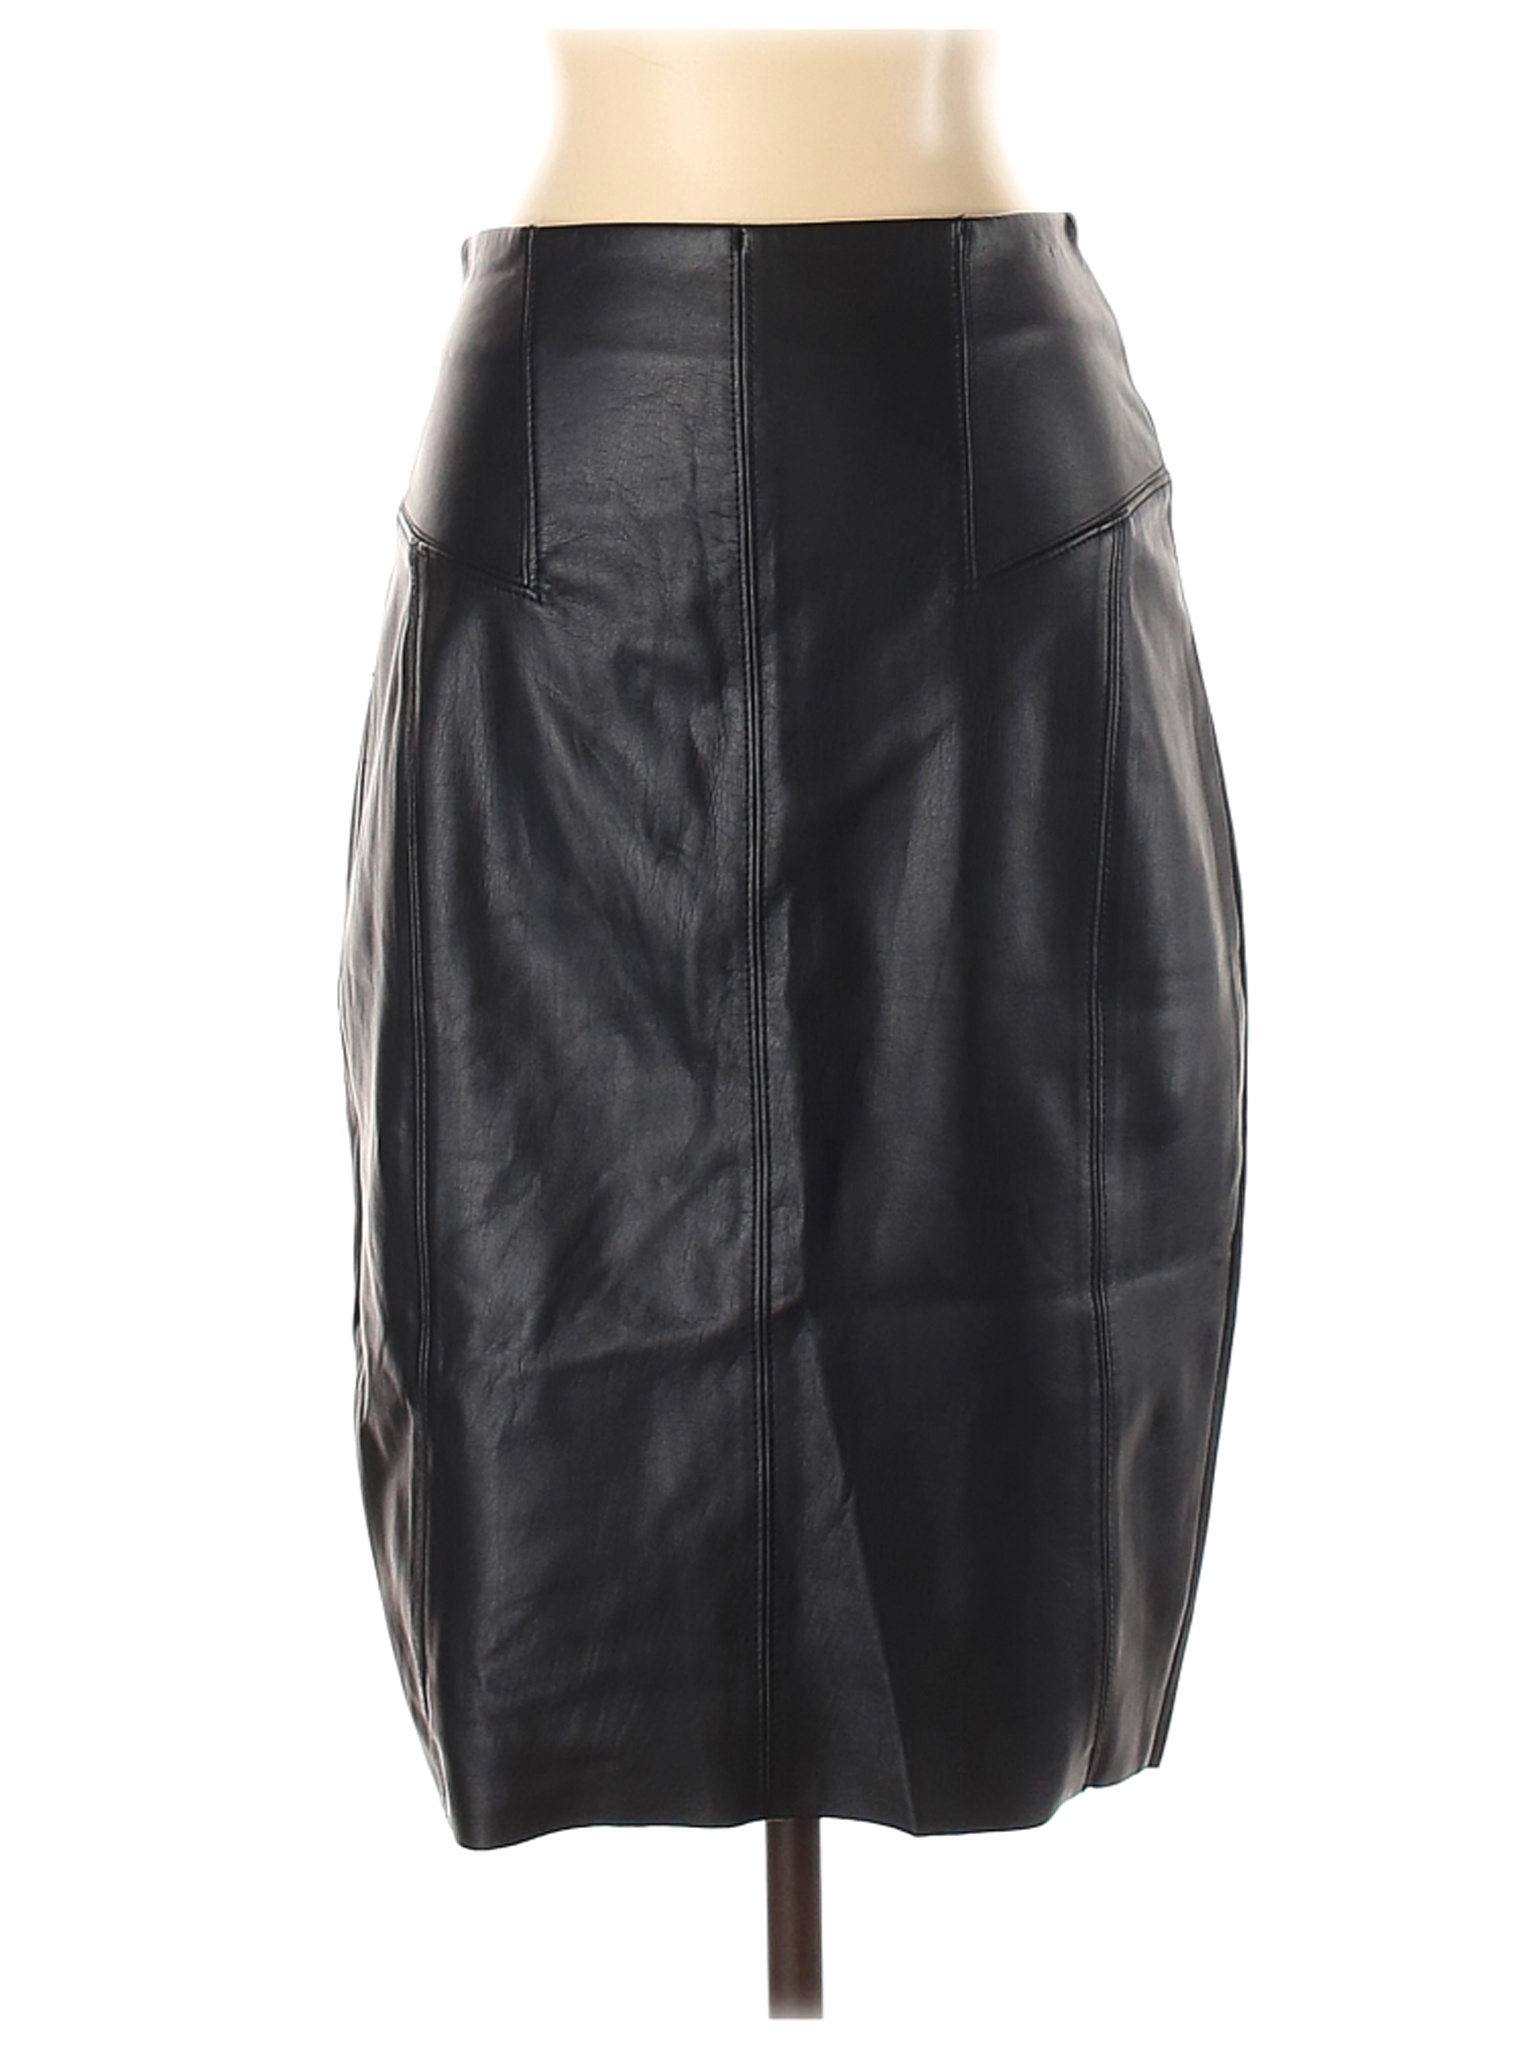 Express Women Black Leather Skirt 2 | eBay